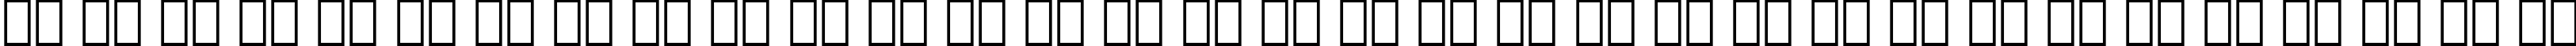 Пример написания русского алфавита шрифтом Geometric 415 Black Italic BT